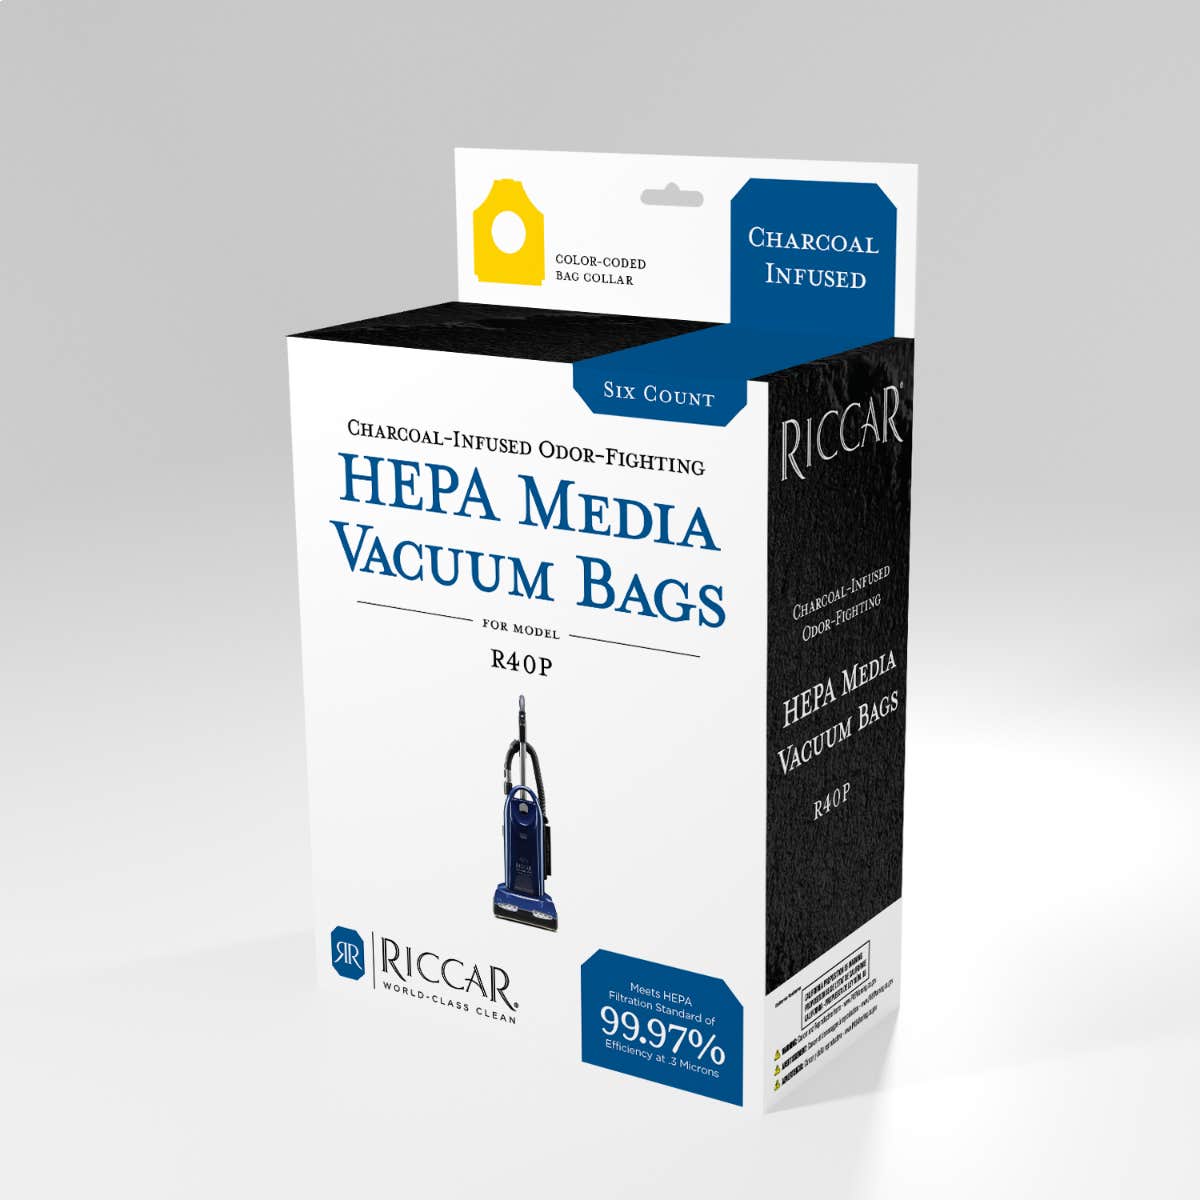 Riccar Hepa Media Vacuum bags